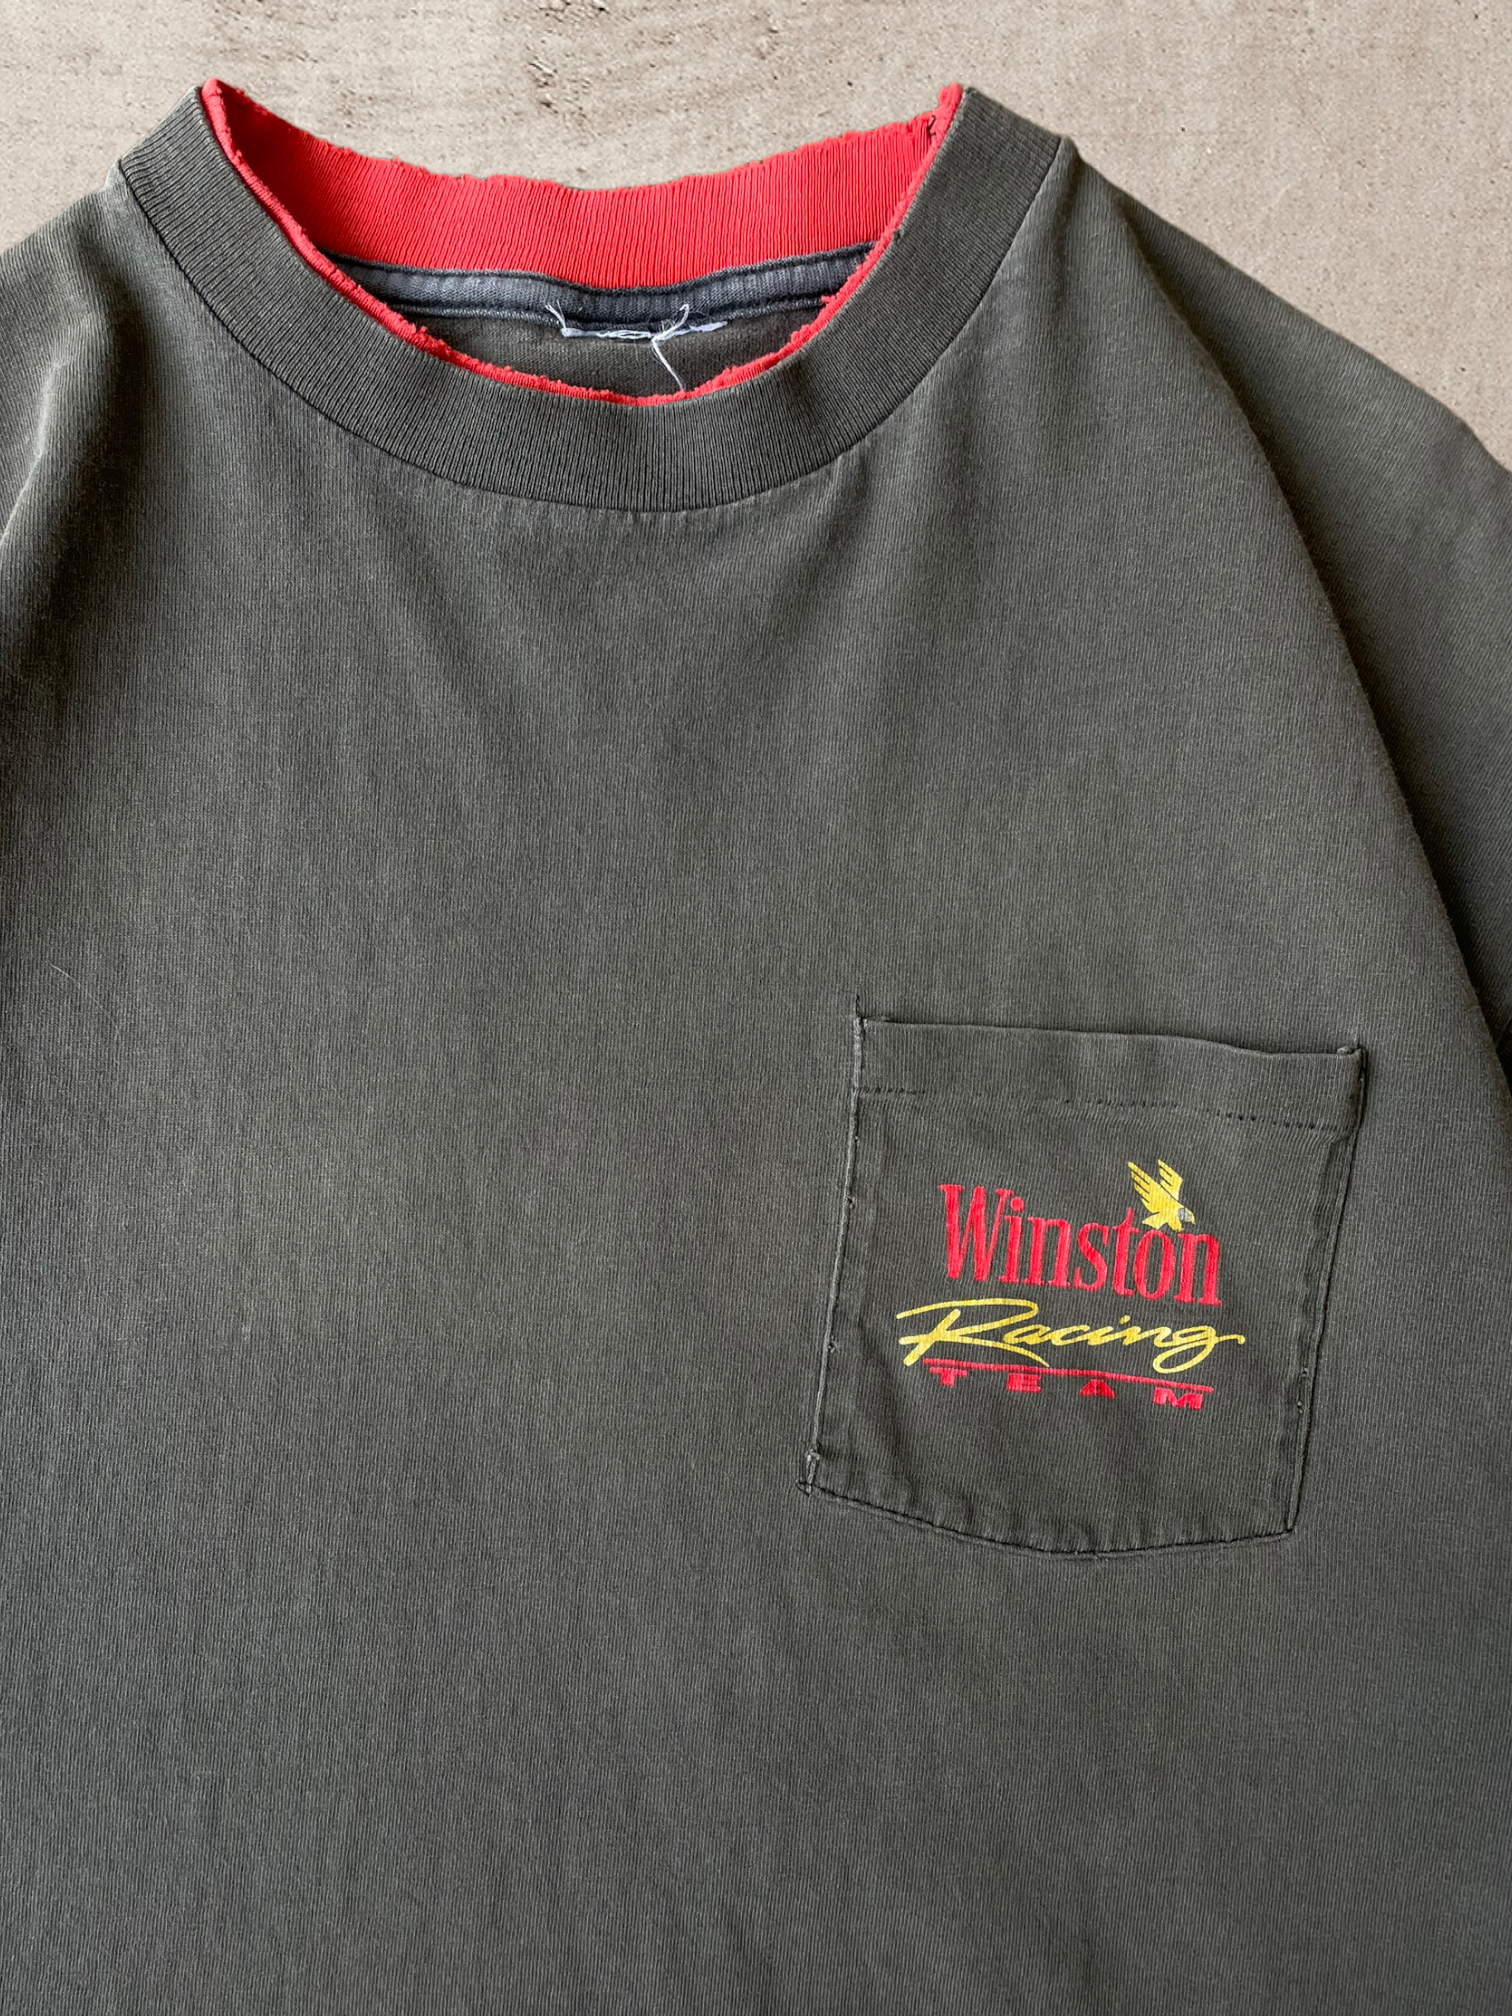 90s Winston Cigarettes Racing Team Shirt - Large